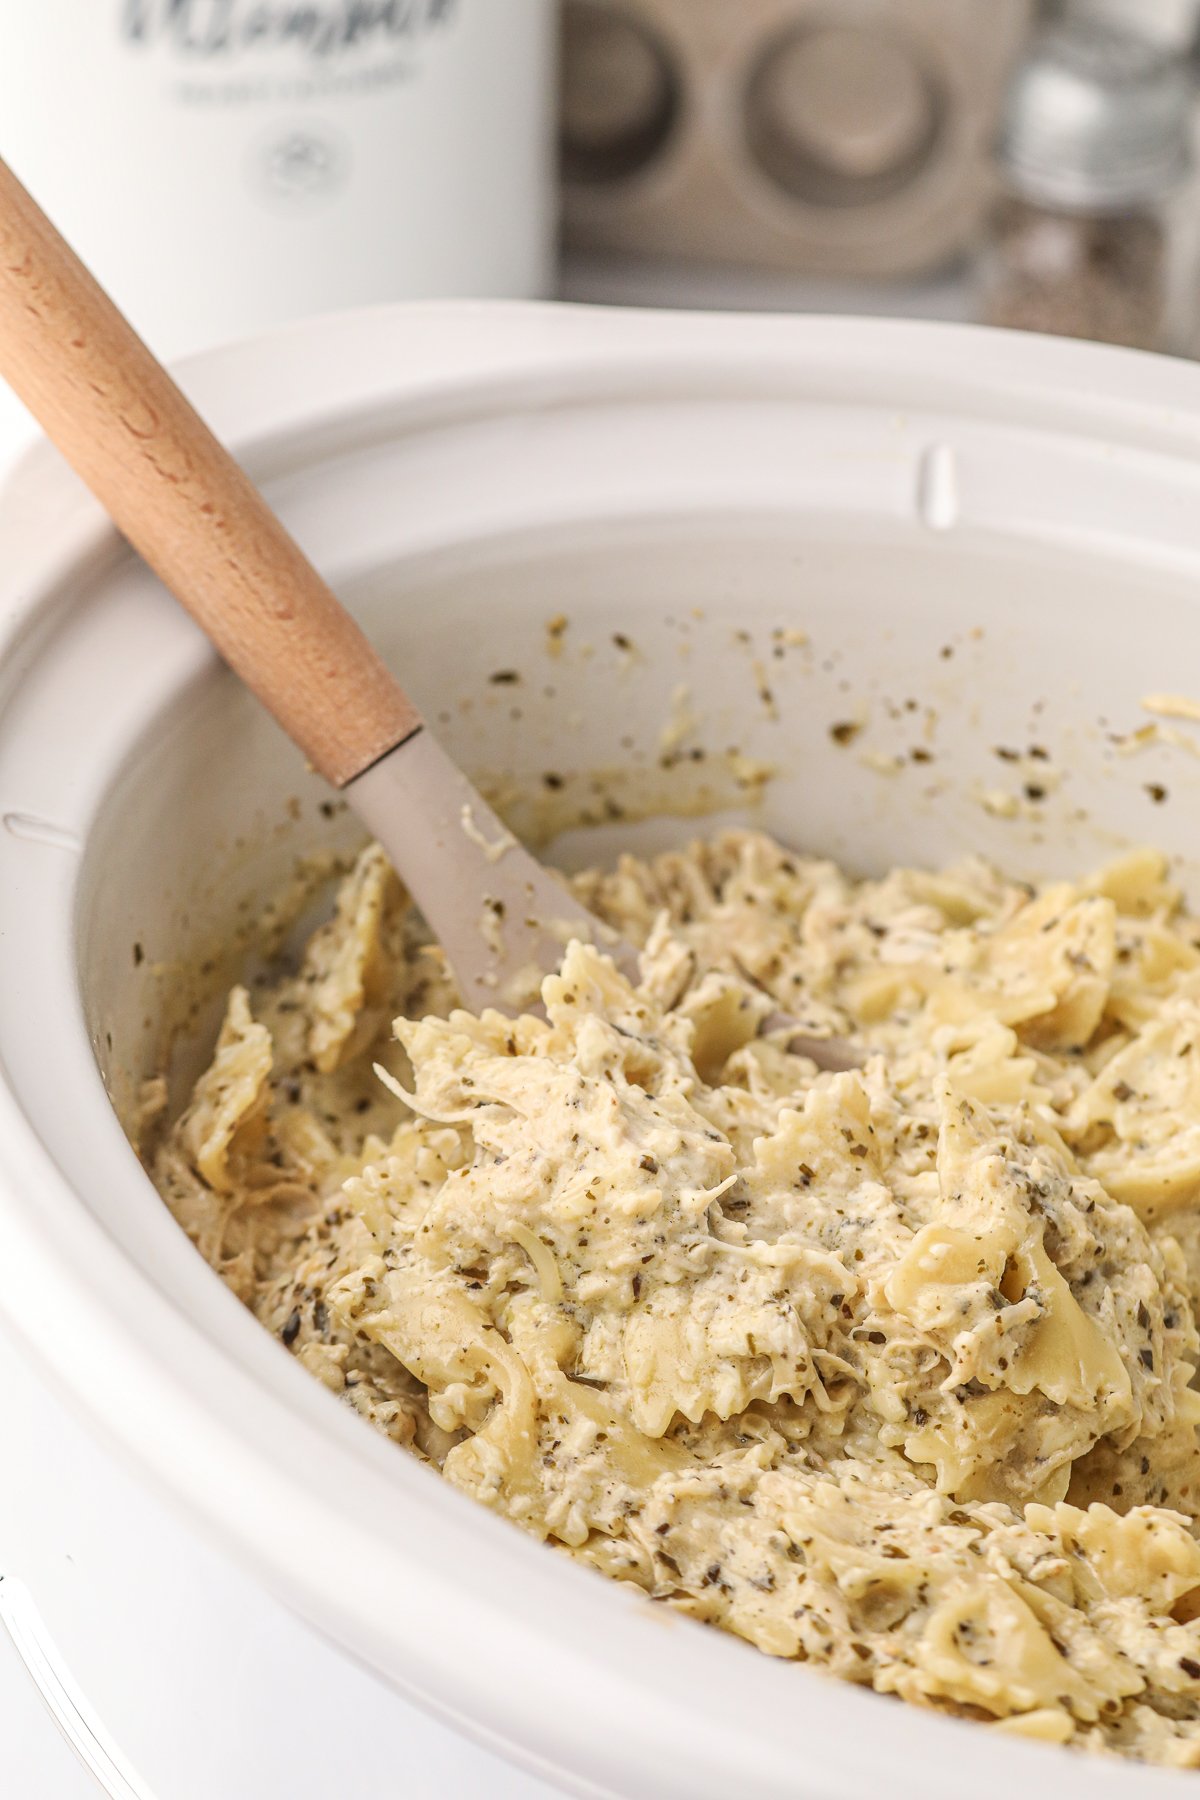 spoon in creamy pesto chicken pasta in crockpot.